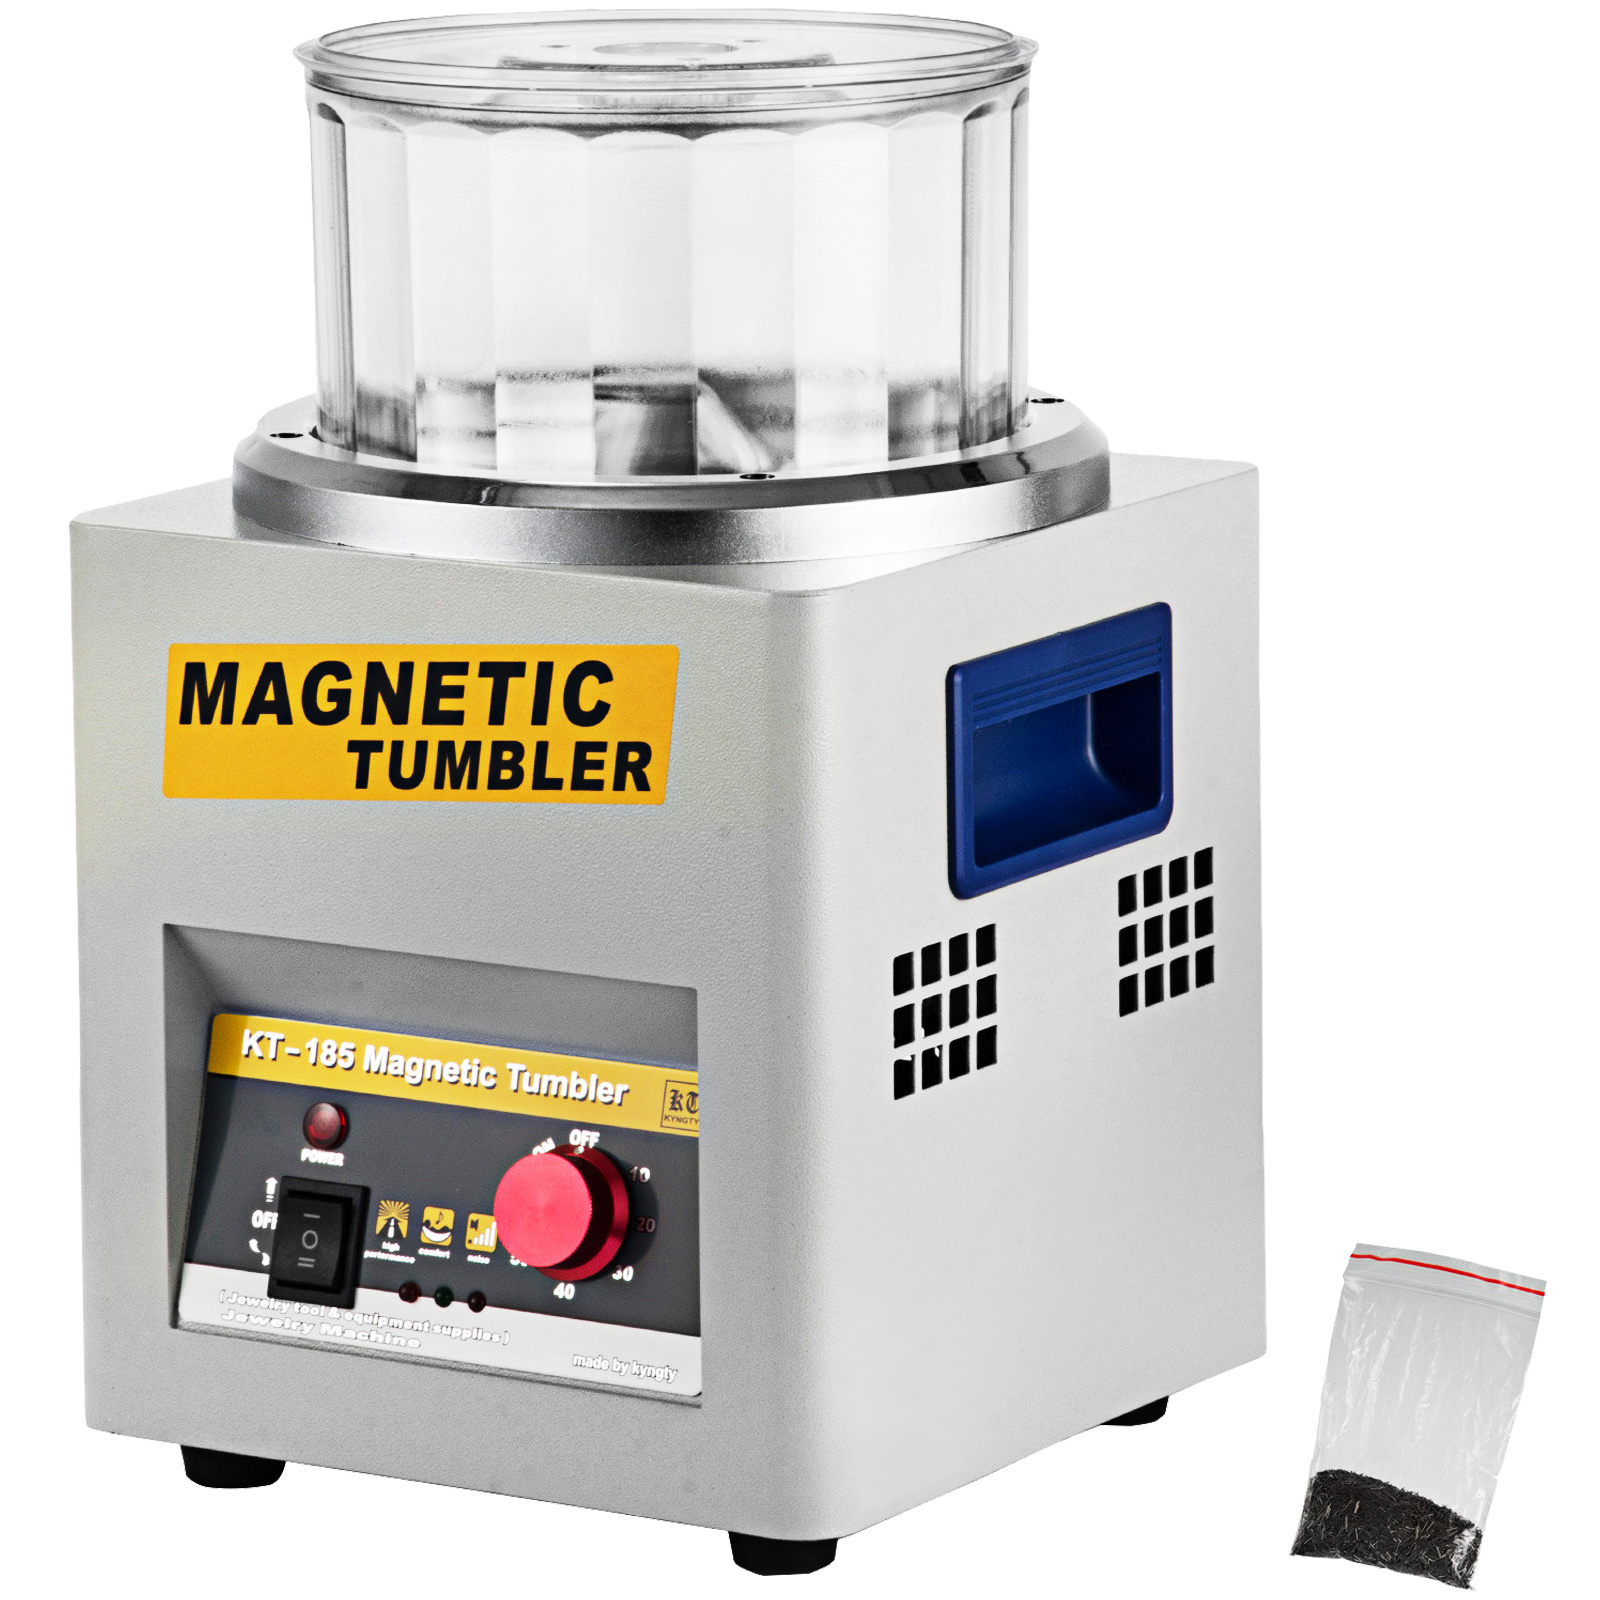 180mm Magnetic Tumbler Jewelry Polisher Machine Polishing 4 Speeds Steel Pins от Vevor Many GEOs